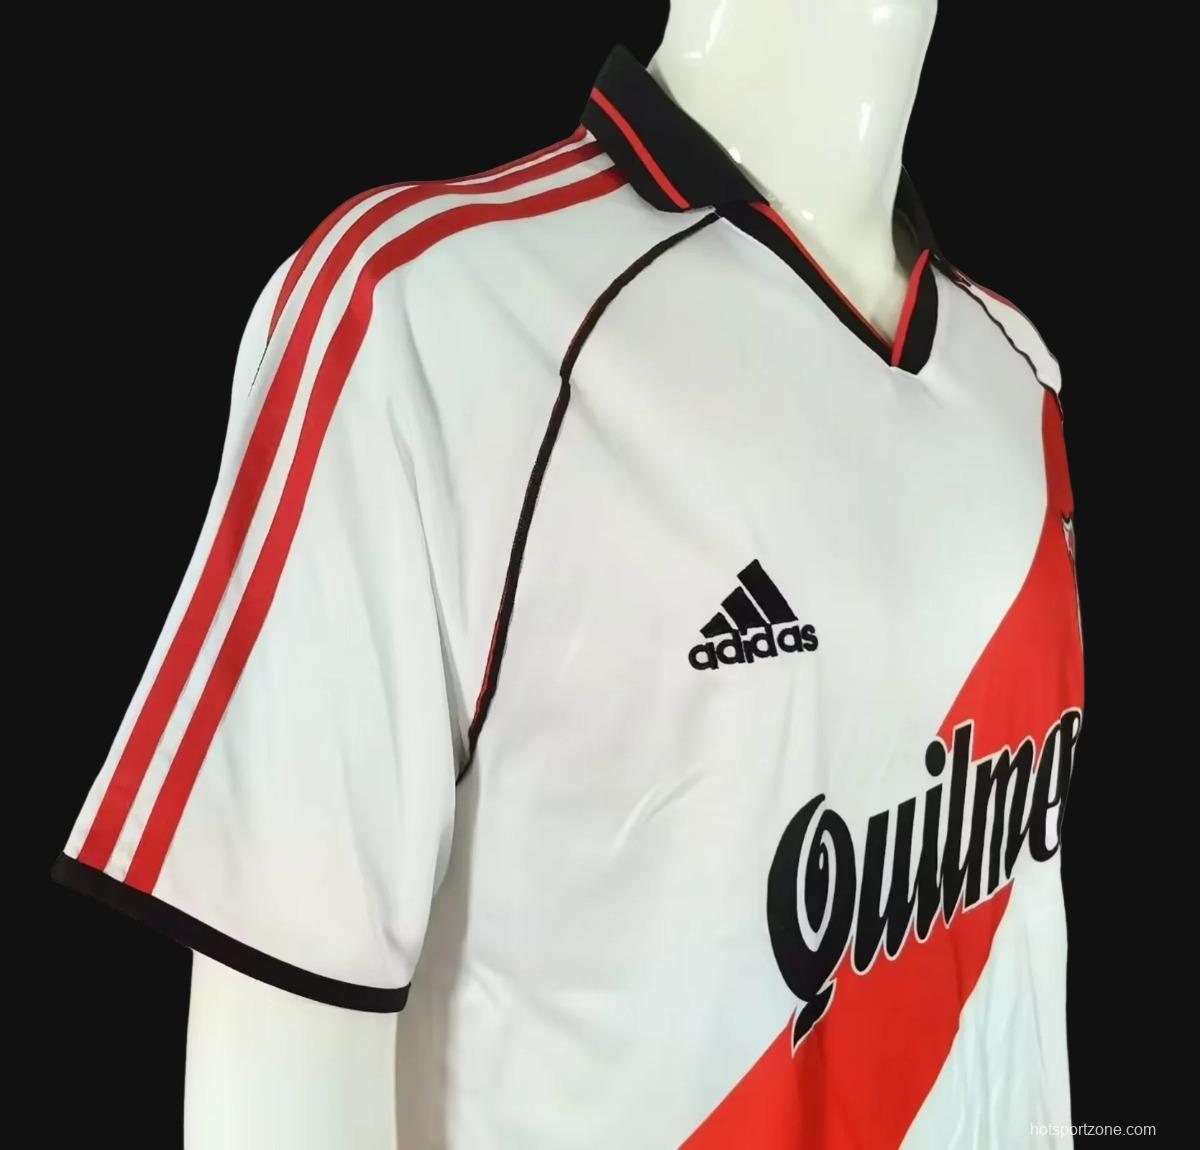 Retro 01/03 River Plate Home Jersey